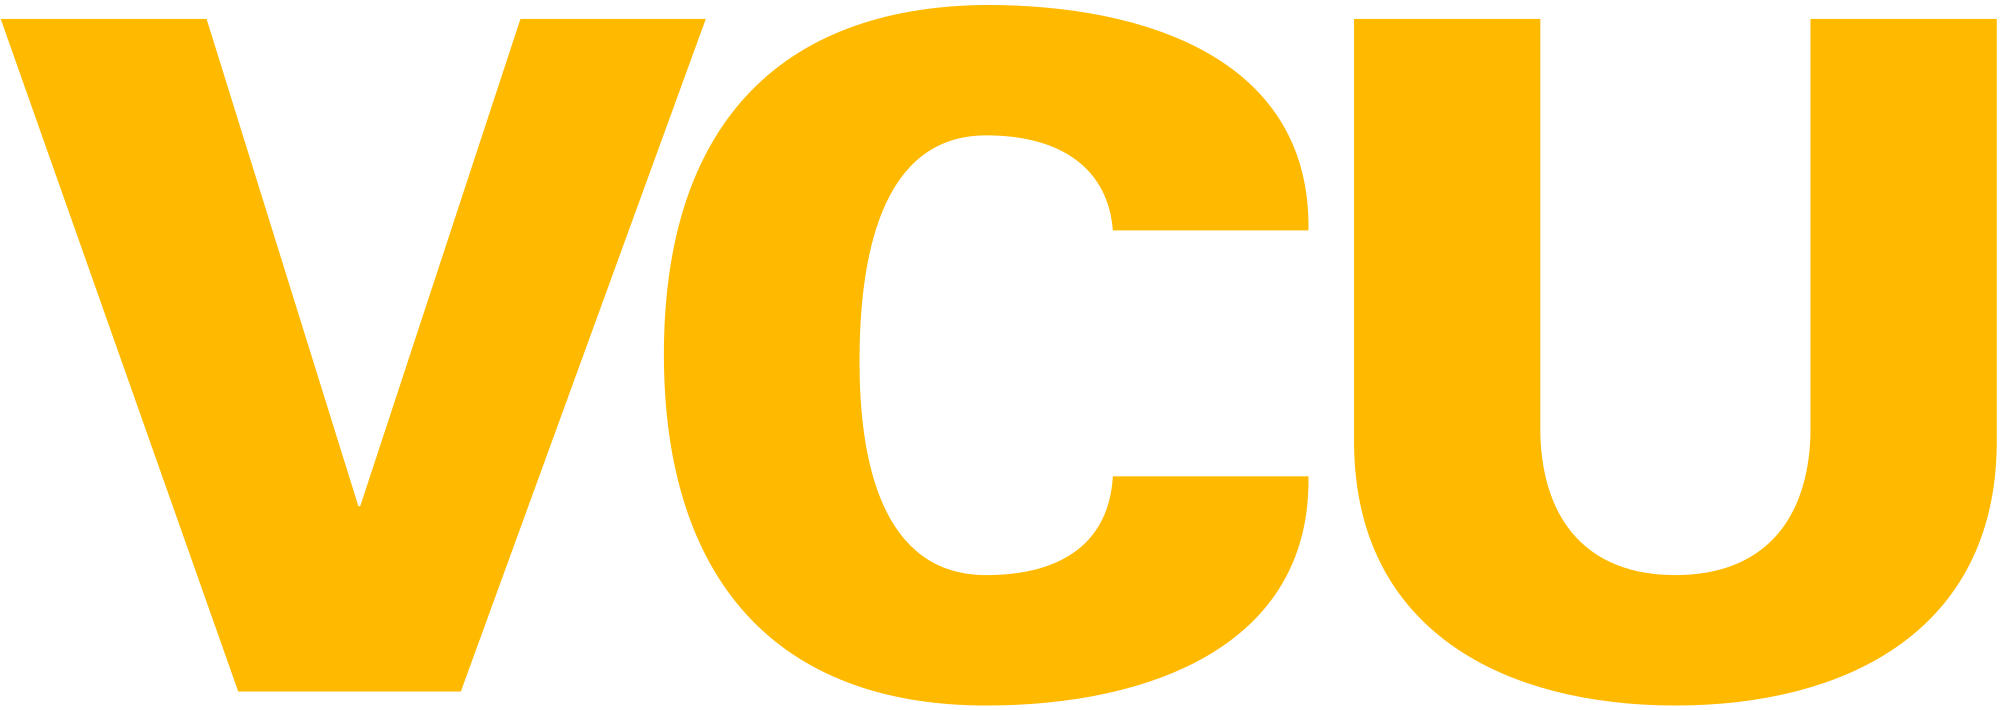 Virginia Commonwealth University Logo - File:VCU typeface.svg - Wikimedia Commons